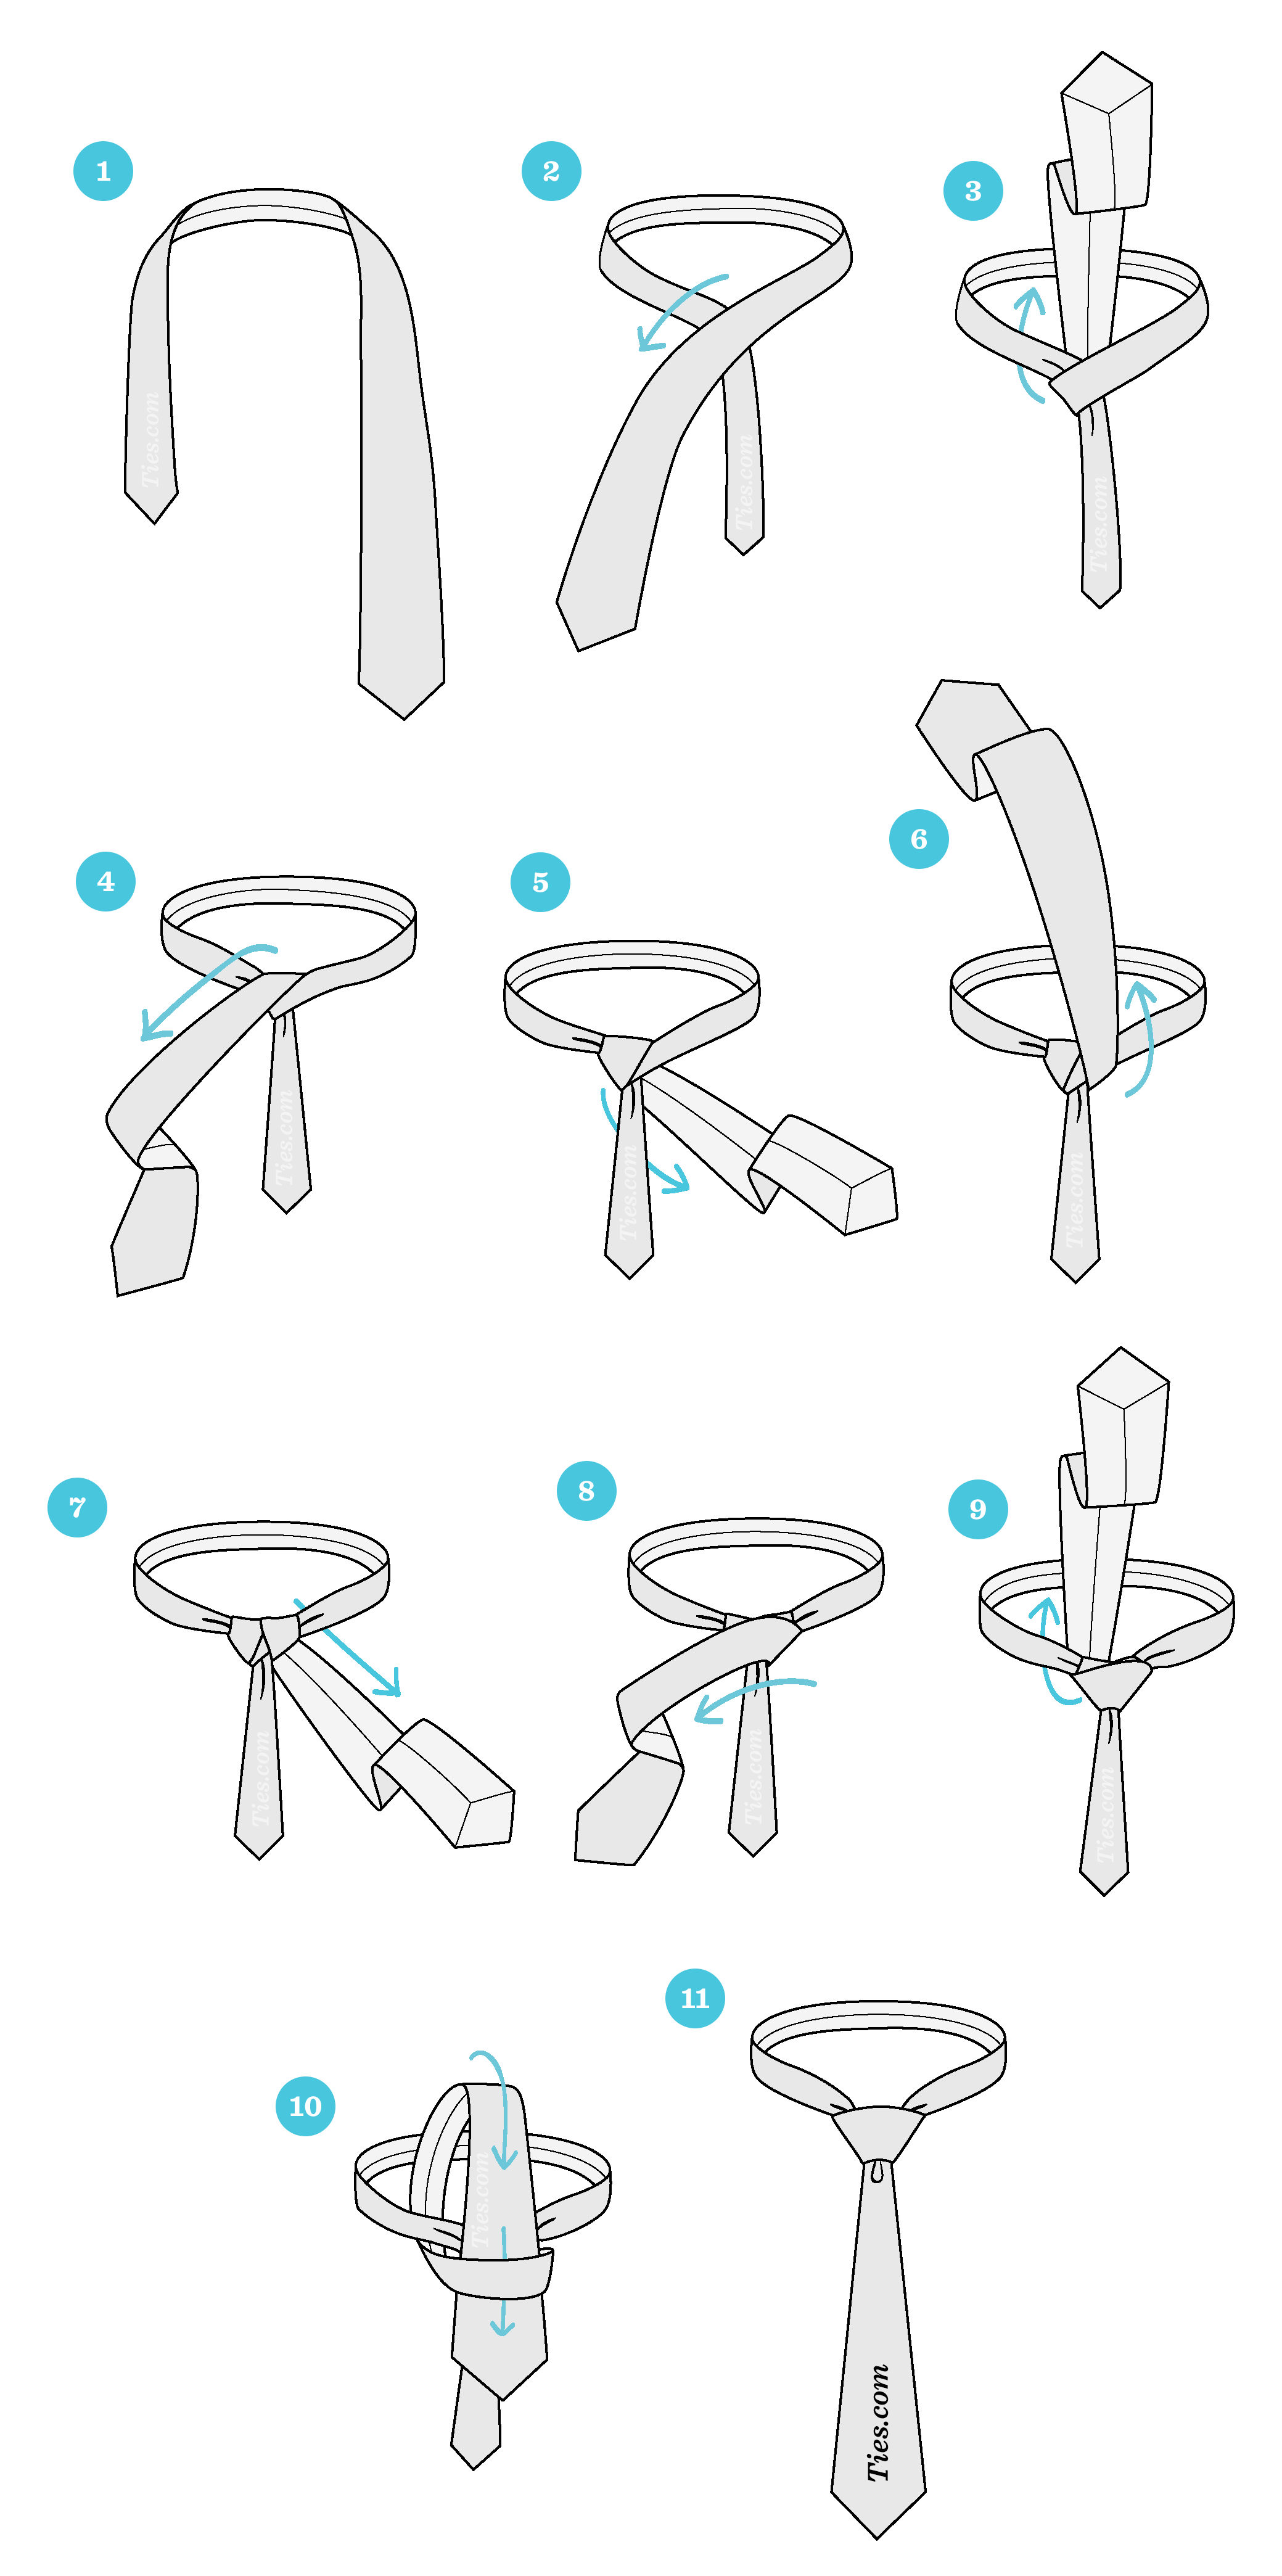 How To Tie A Windsor Knot | Ties.com